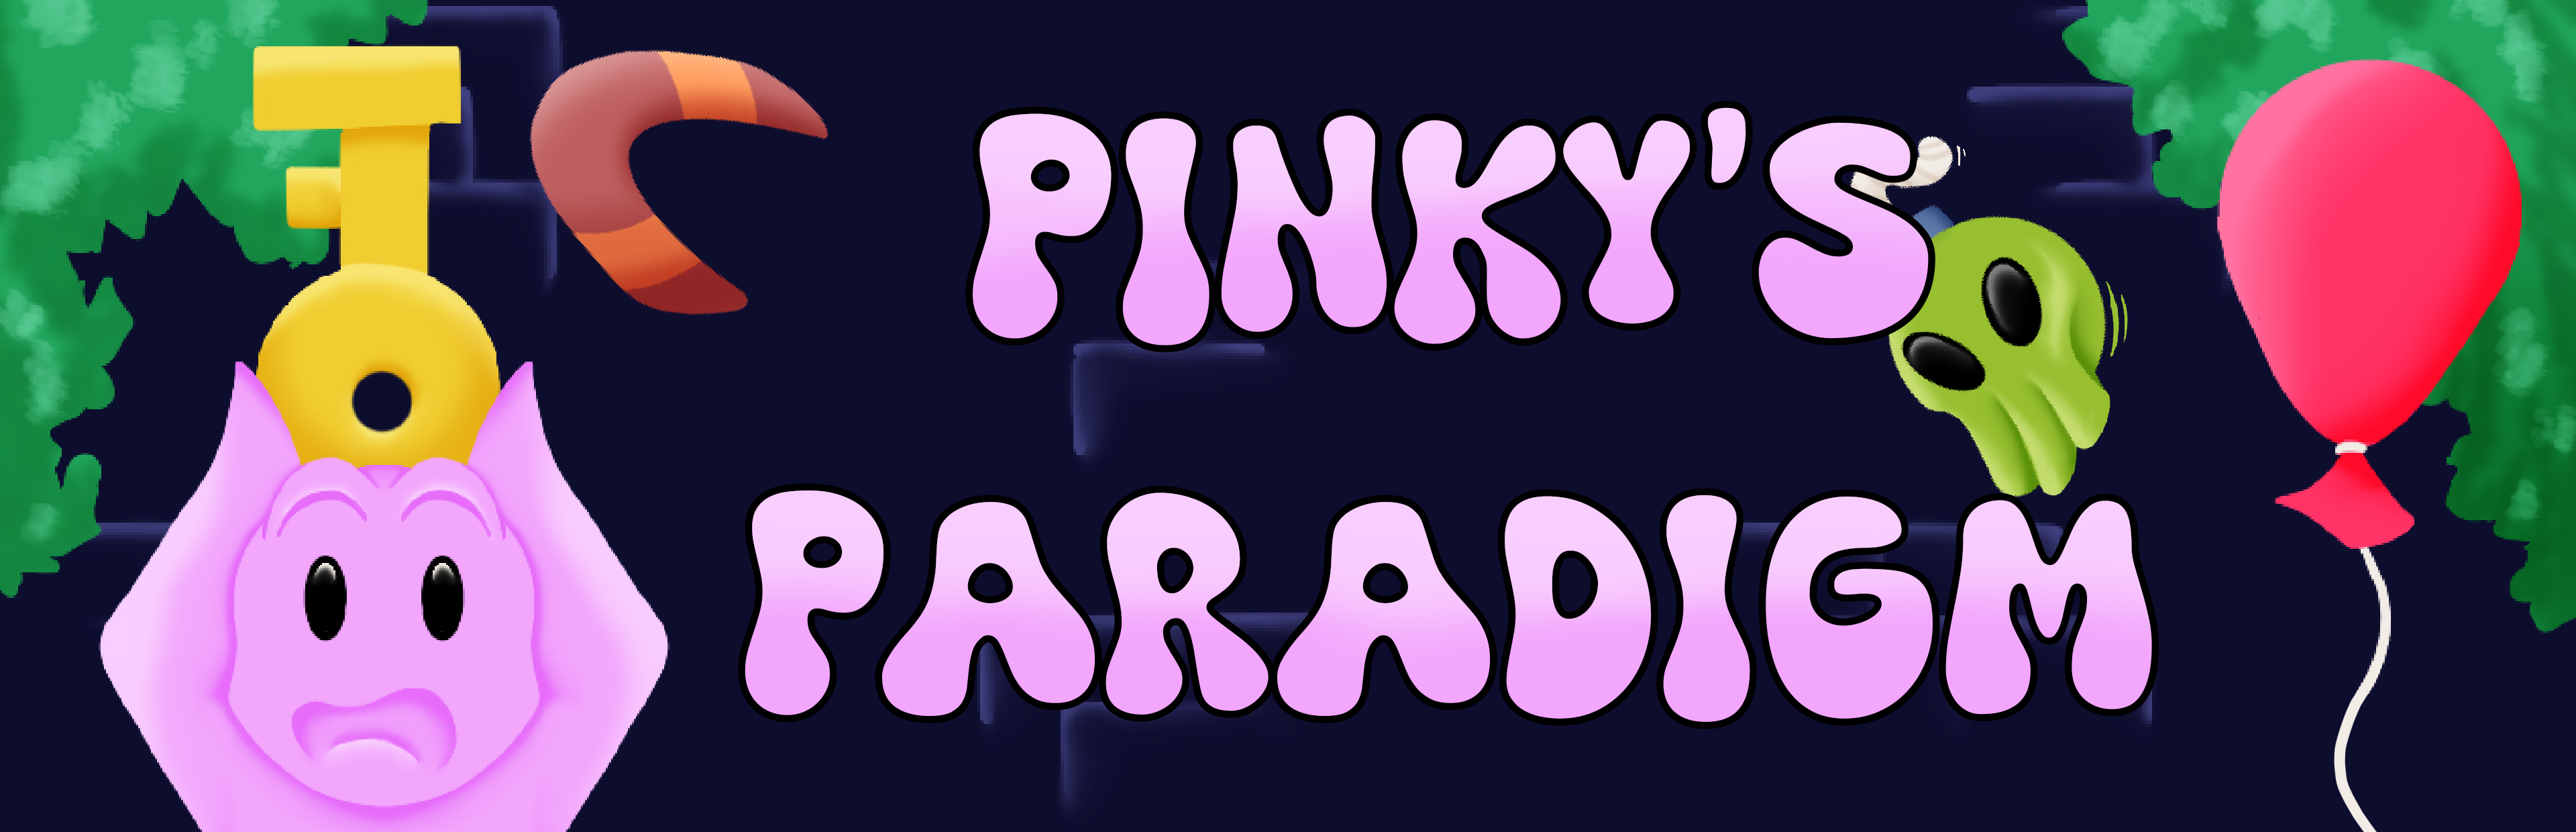 Pinky's Paradigm Demo